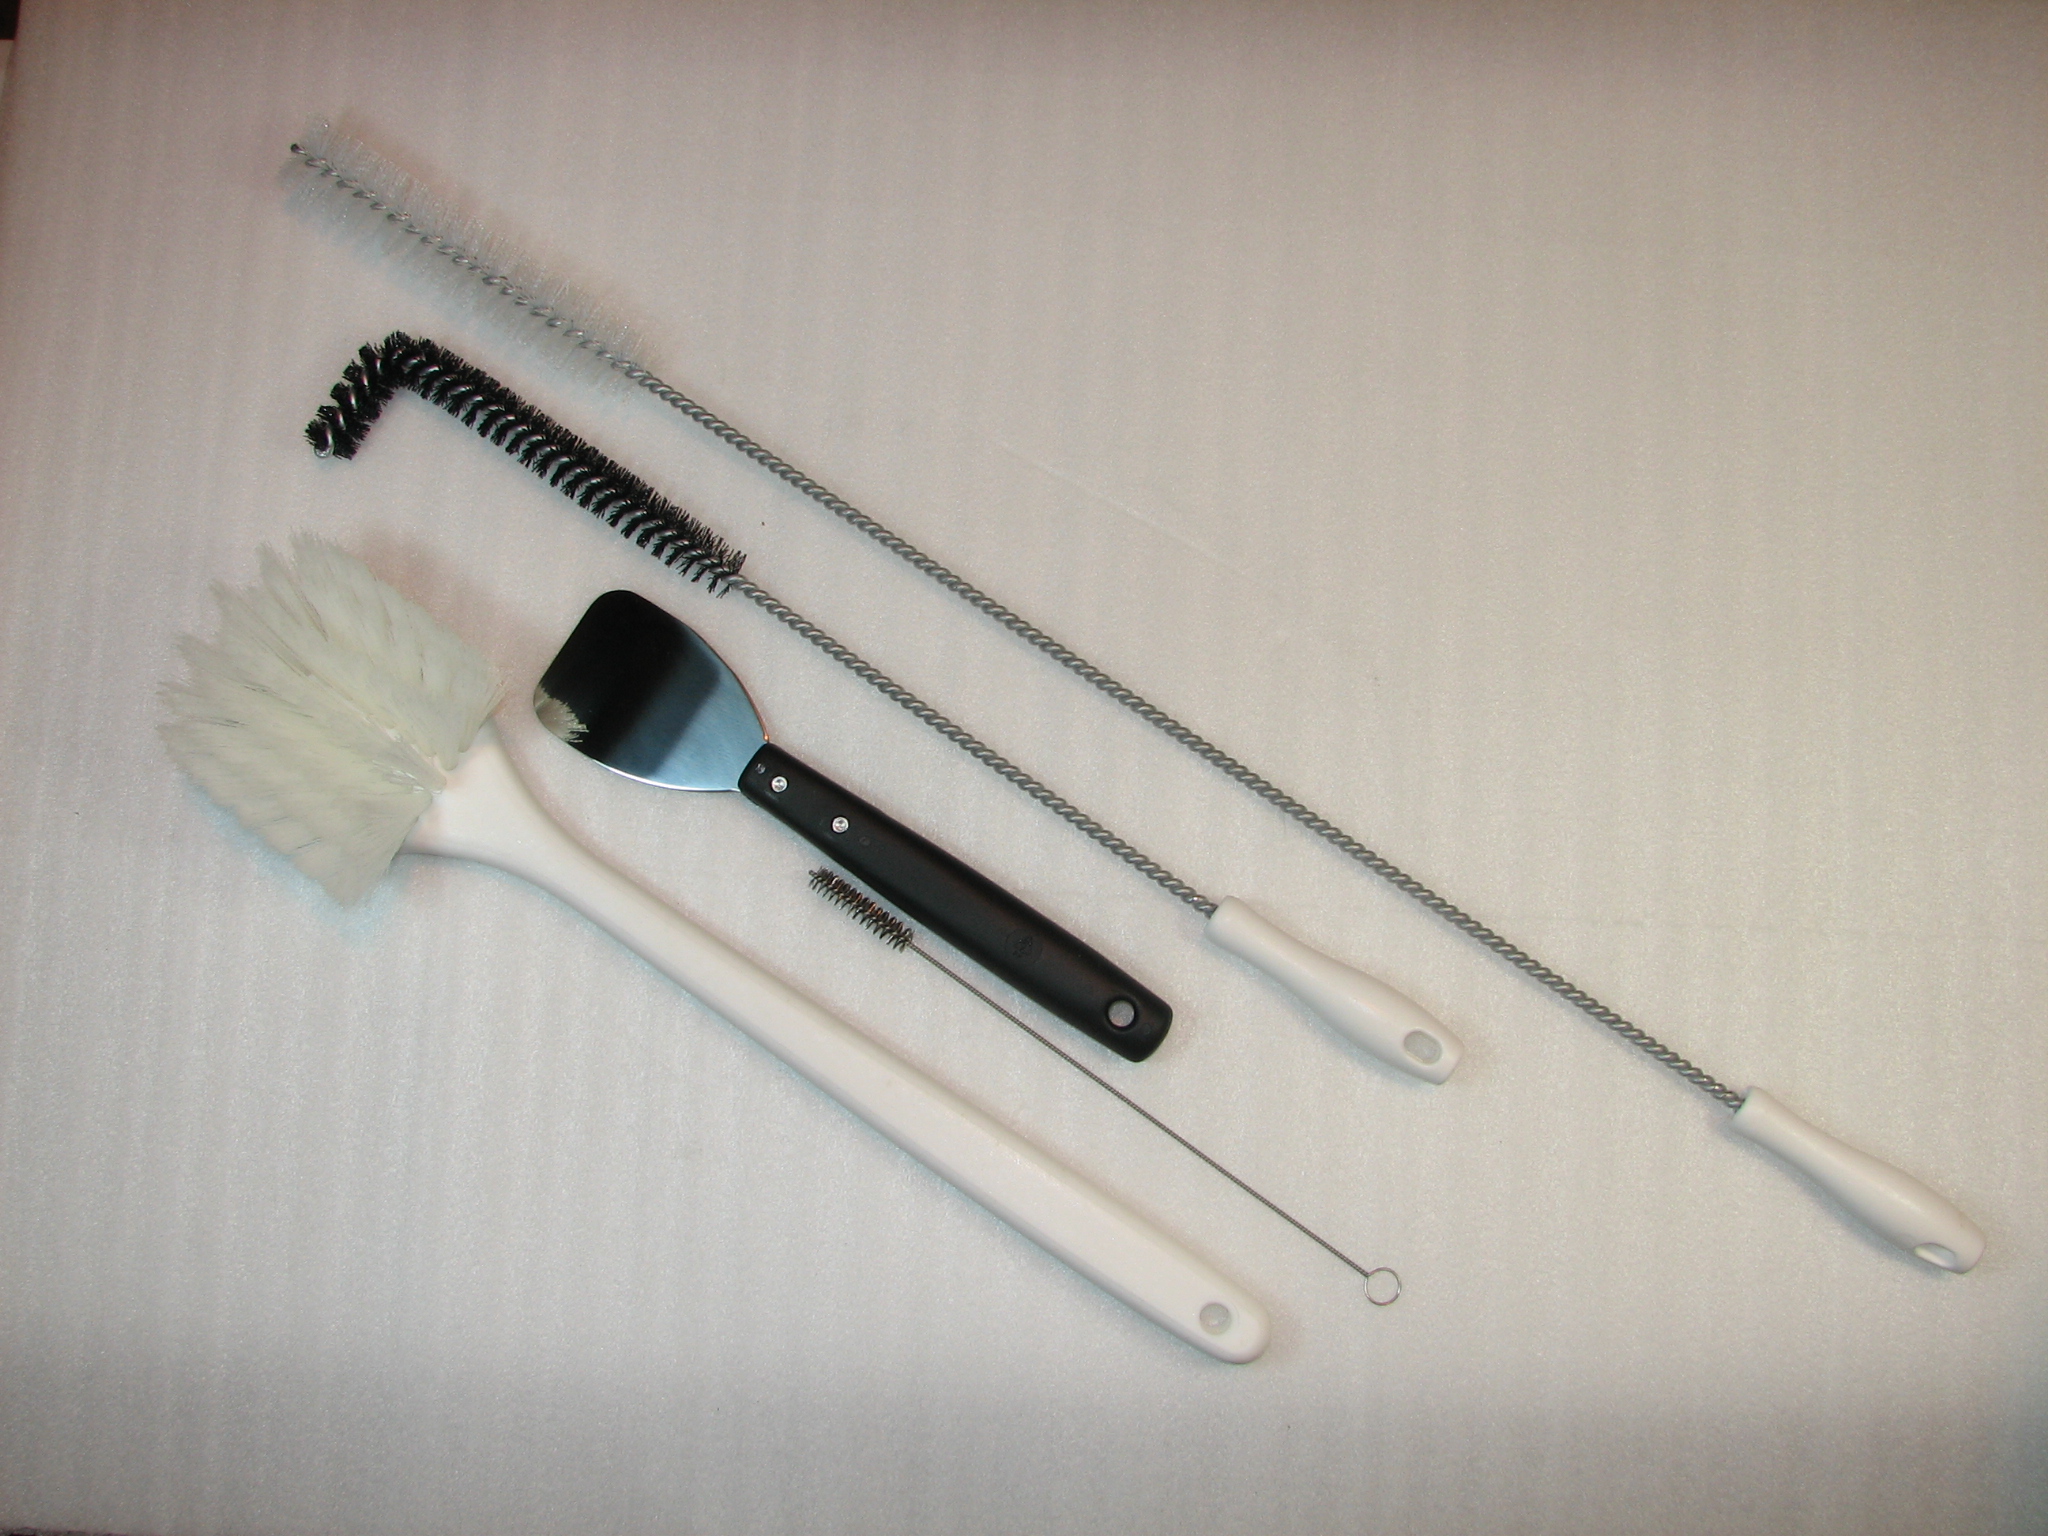 Universal Brush Kit with Pot Scraper, 03736